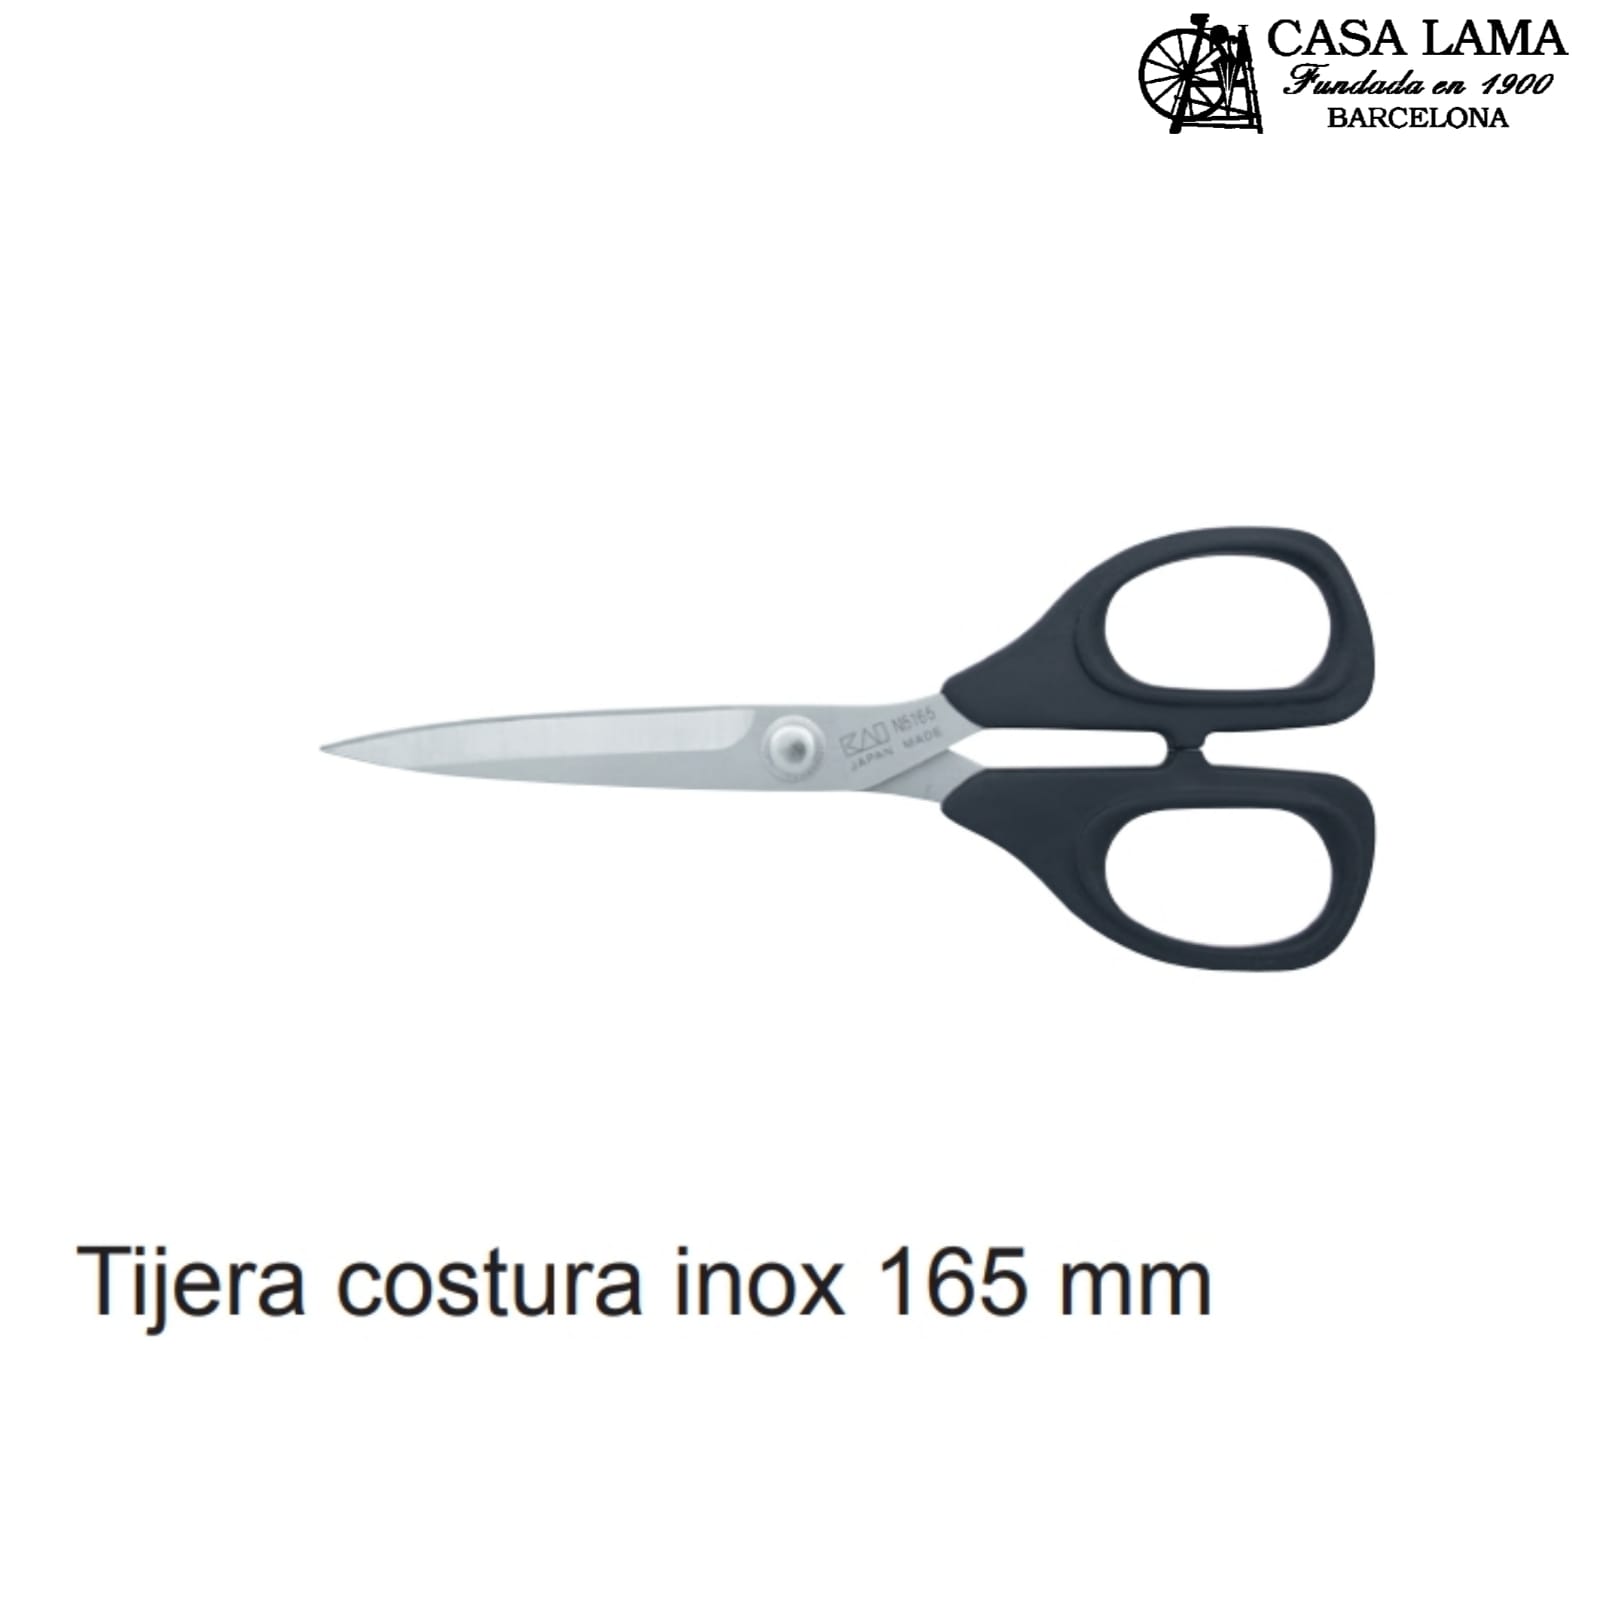 Tijera costura inox 165mm Kai serie 5000 - Cuchilleria Casa Lama